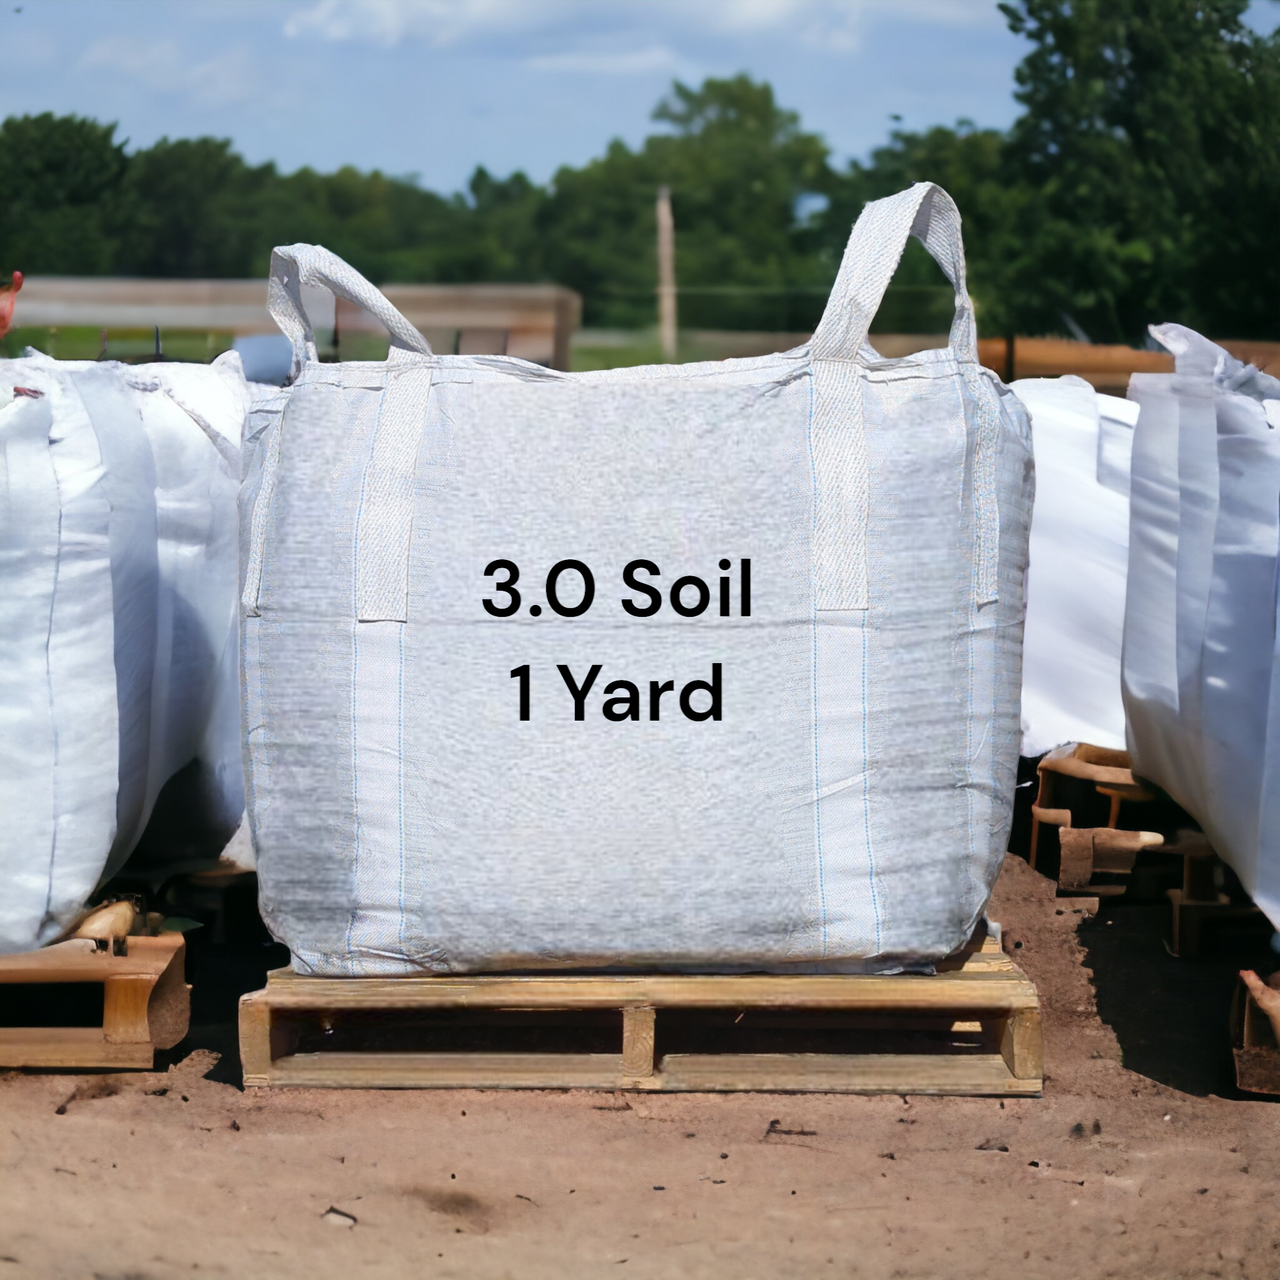 Canadian Sphagnum Peat Moss - Premium Soil Amendment – BuildASoil